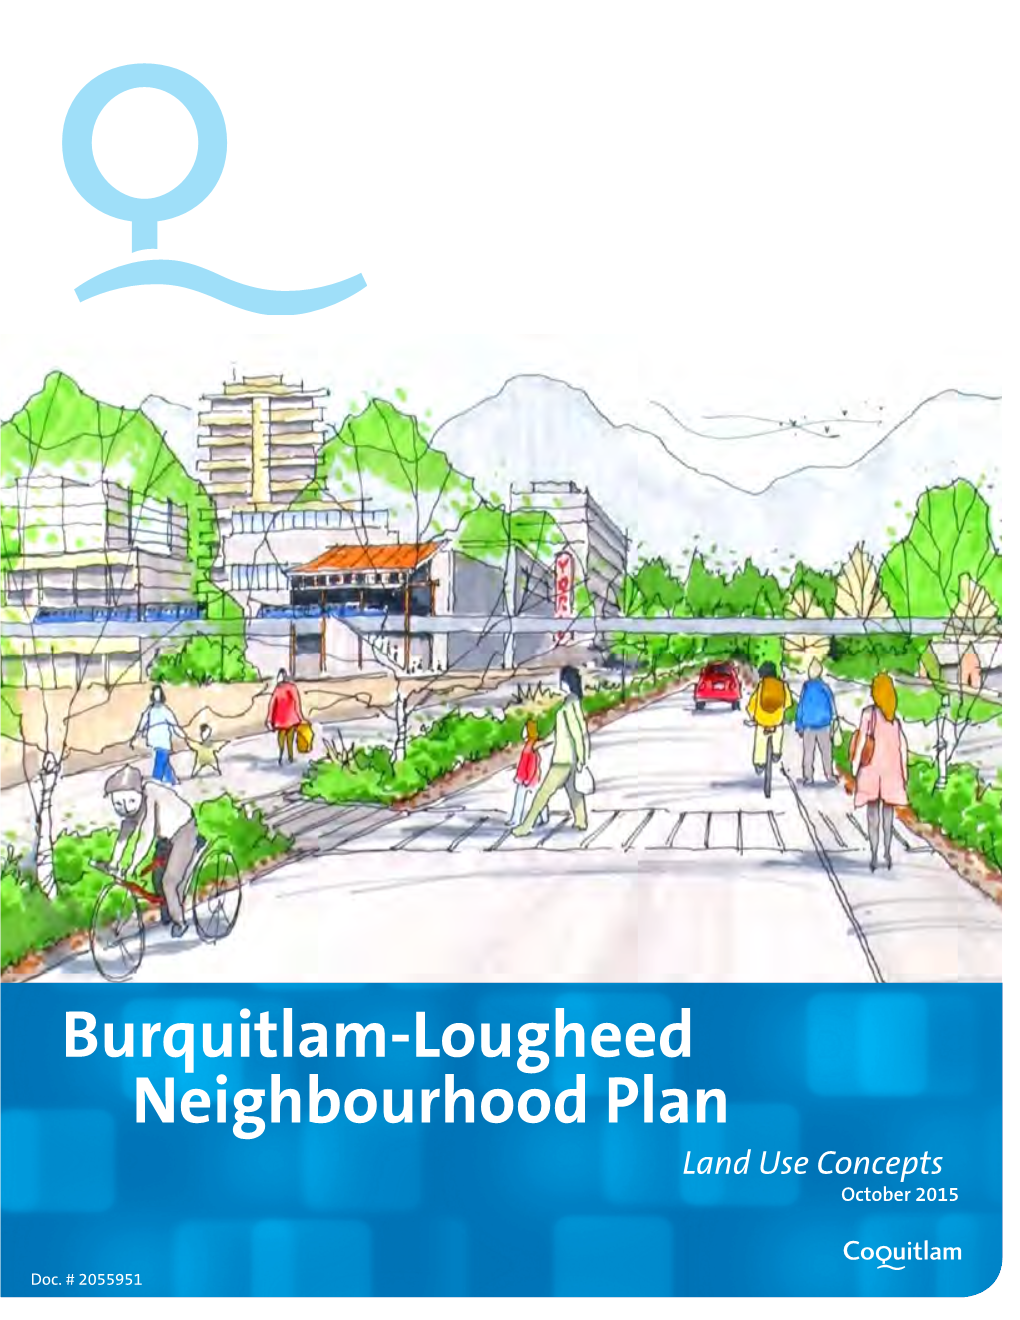 Burquitlam-Lougheed Neighbourhood Plan Land Use Concepts October 2015